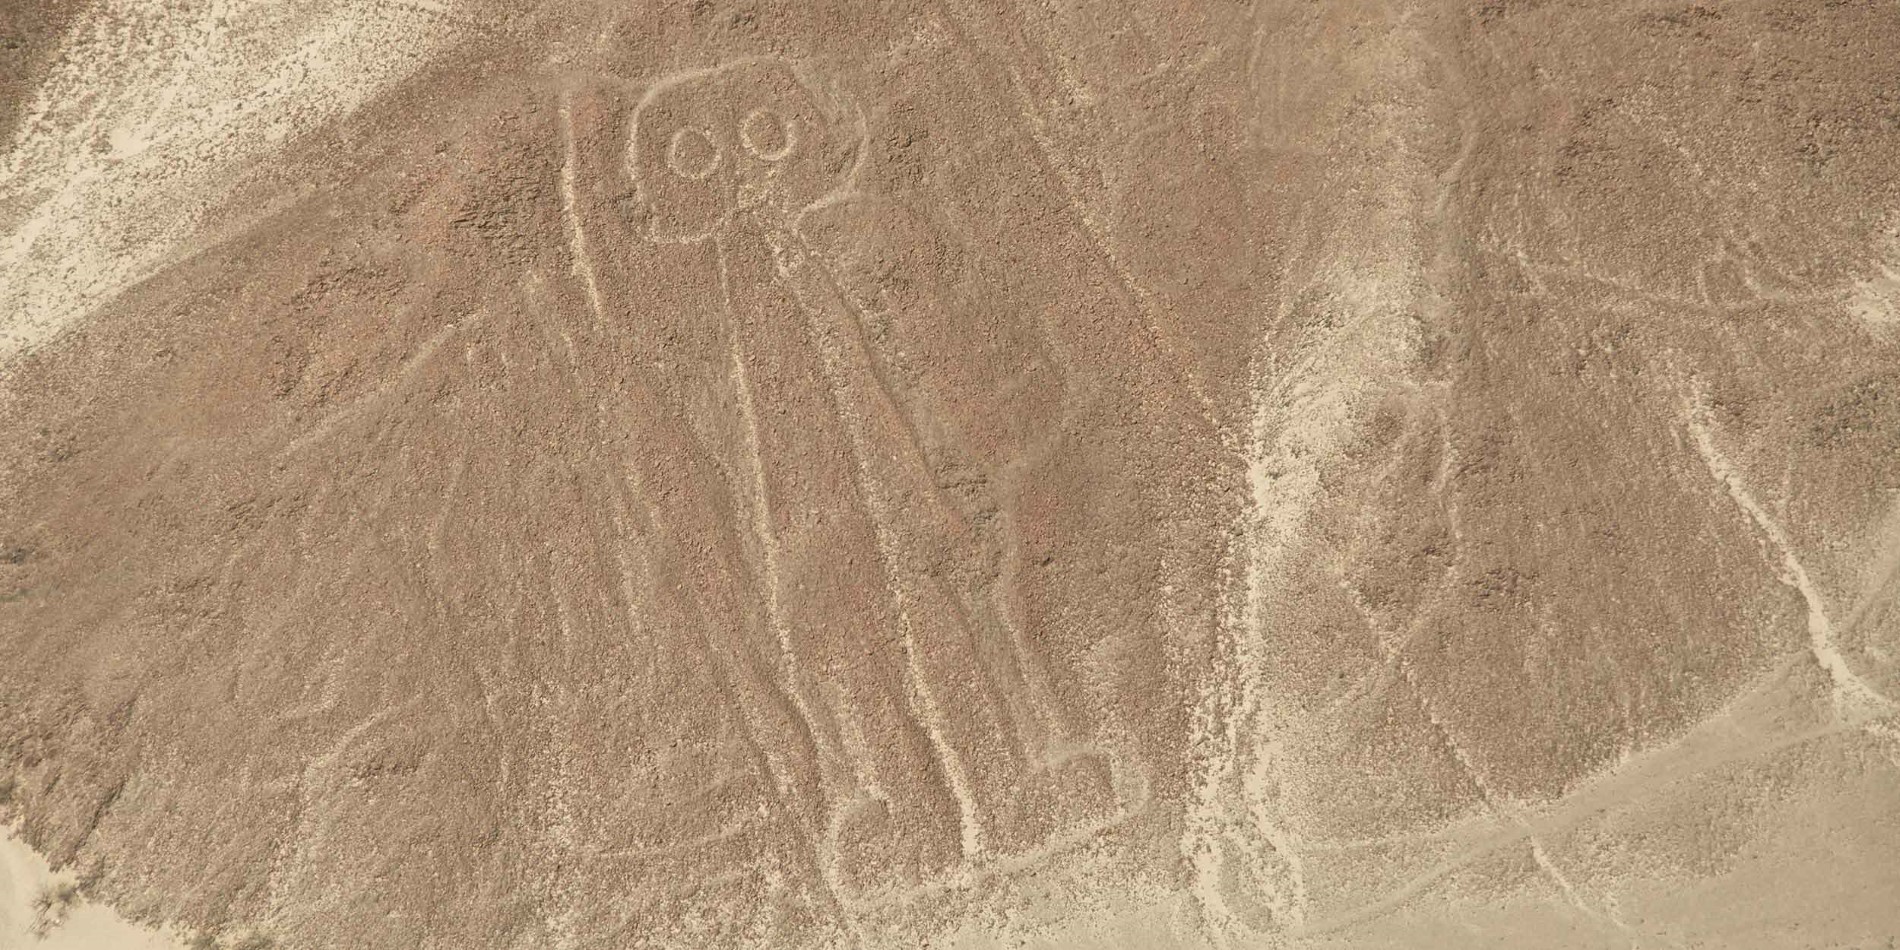 Geoglyph Owlman, Nazca lines, Pérou